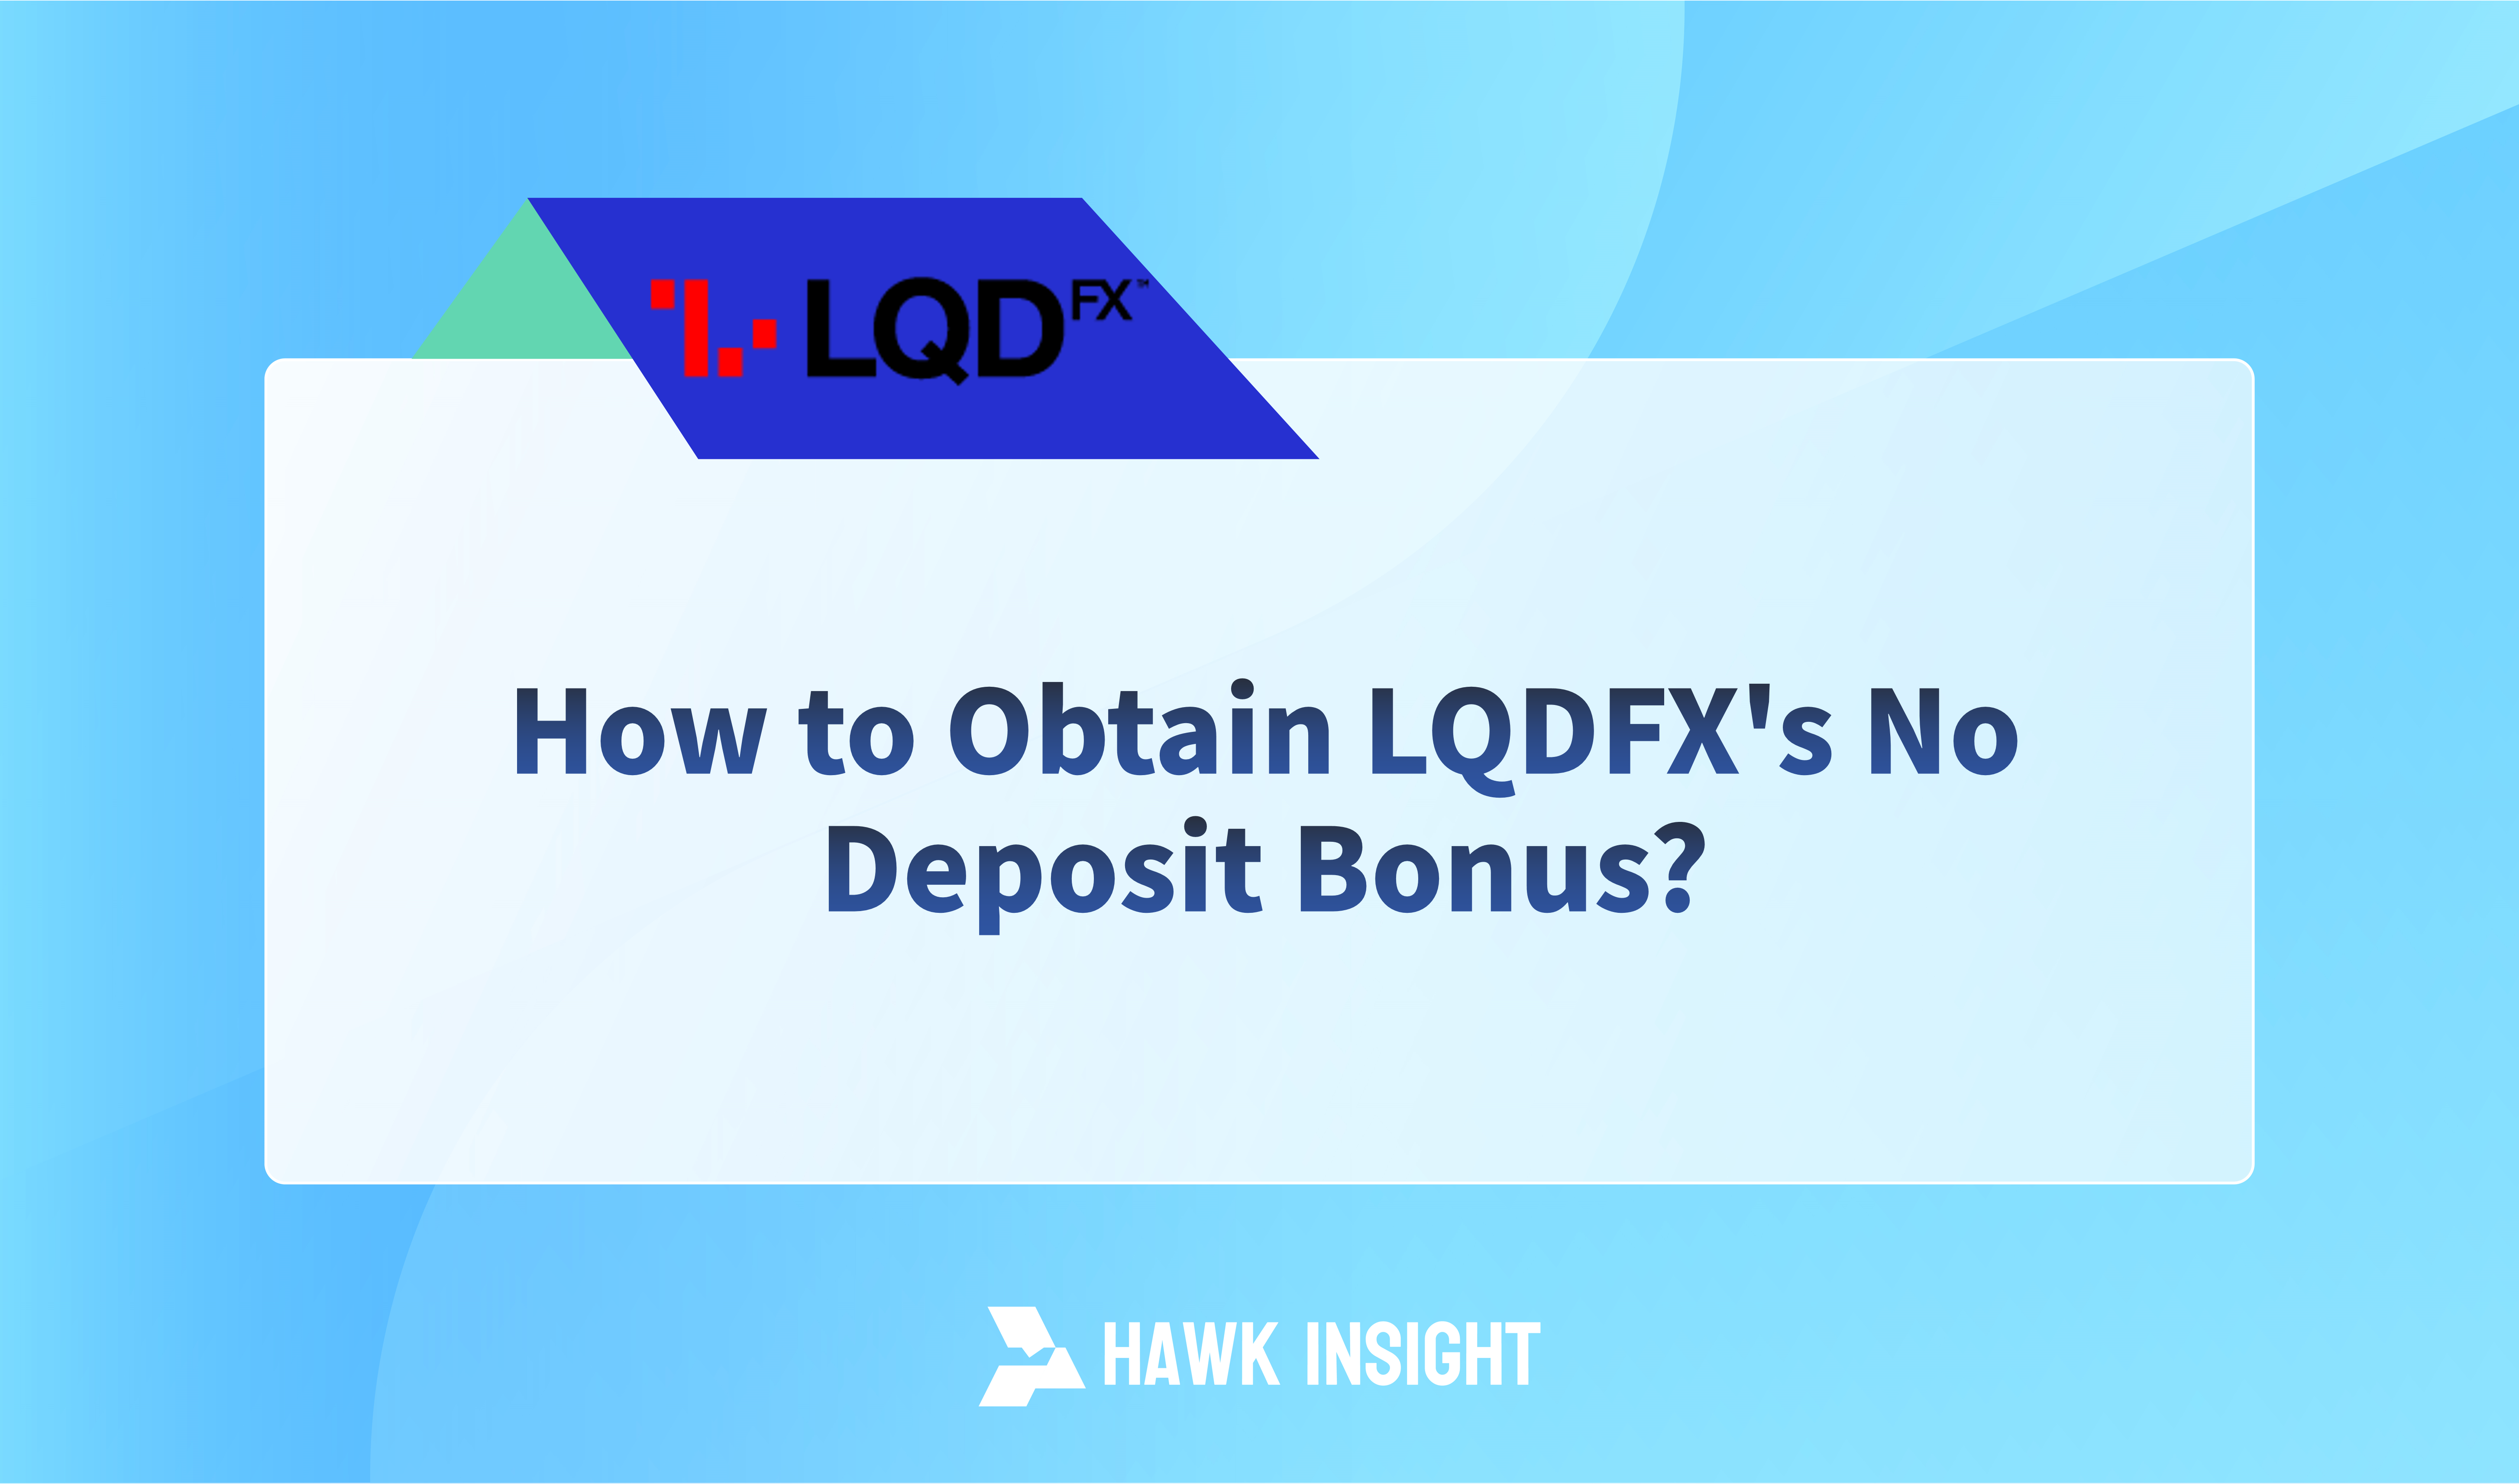 How to Obtain LQDFX's No Deposit Bonus?